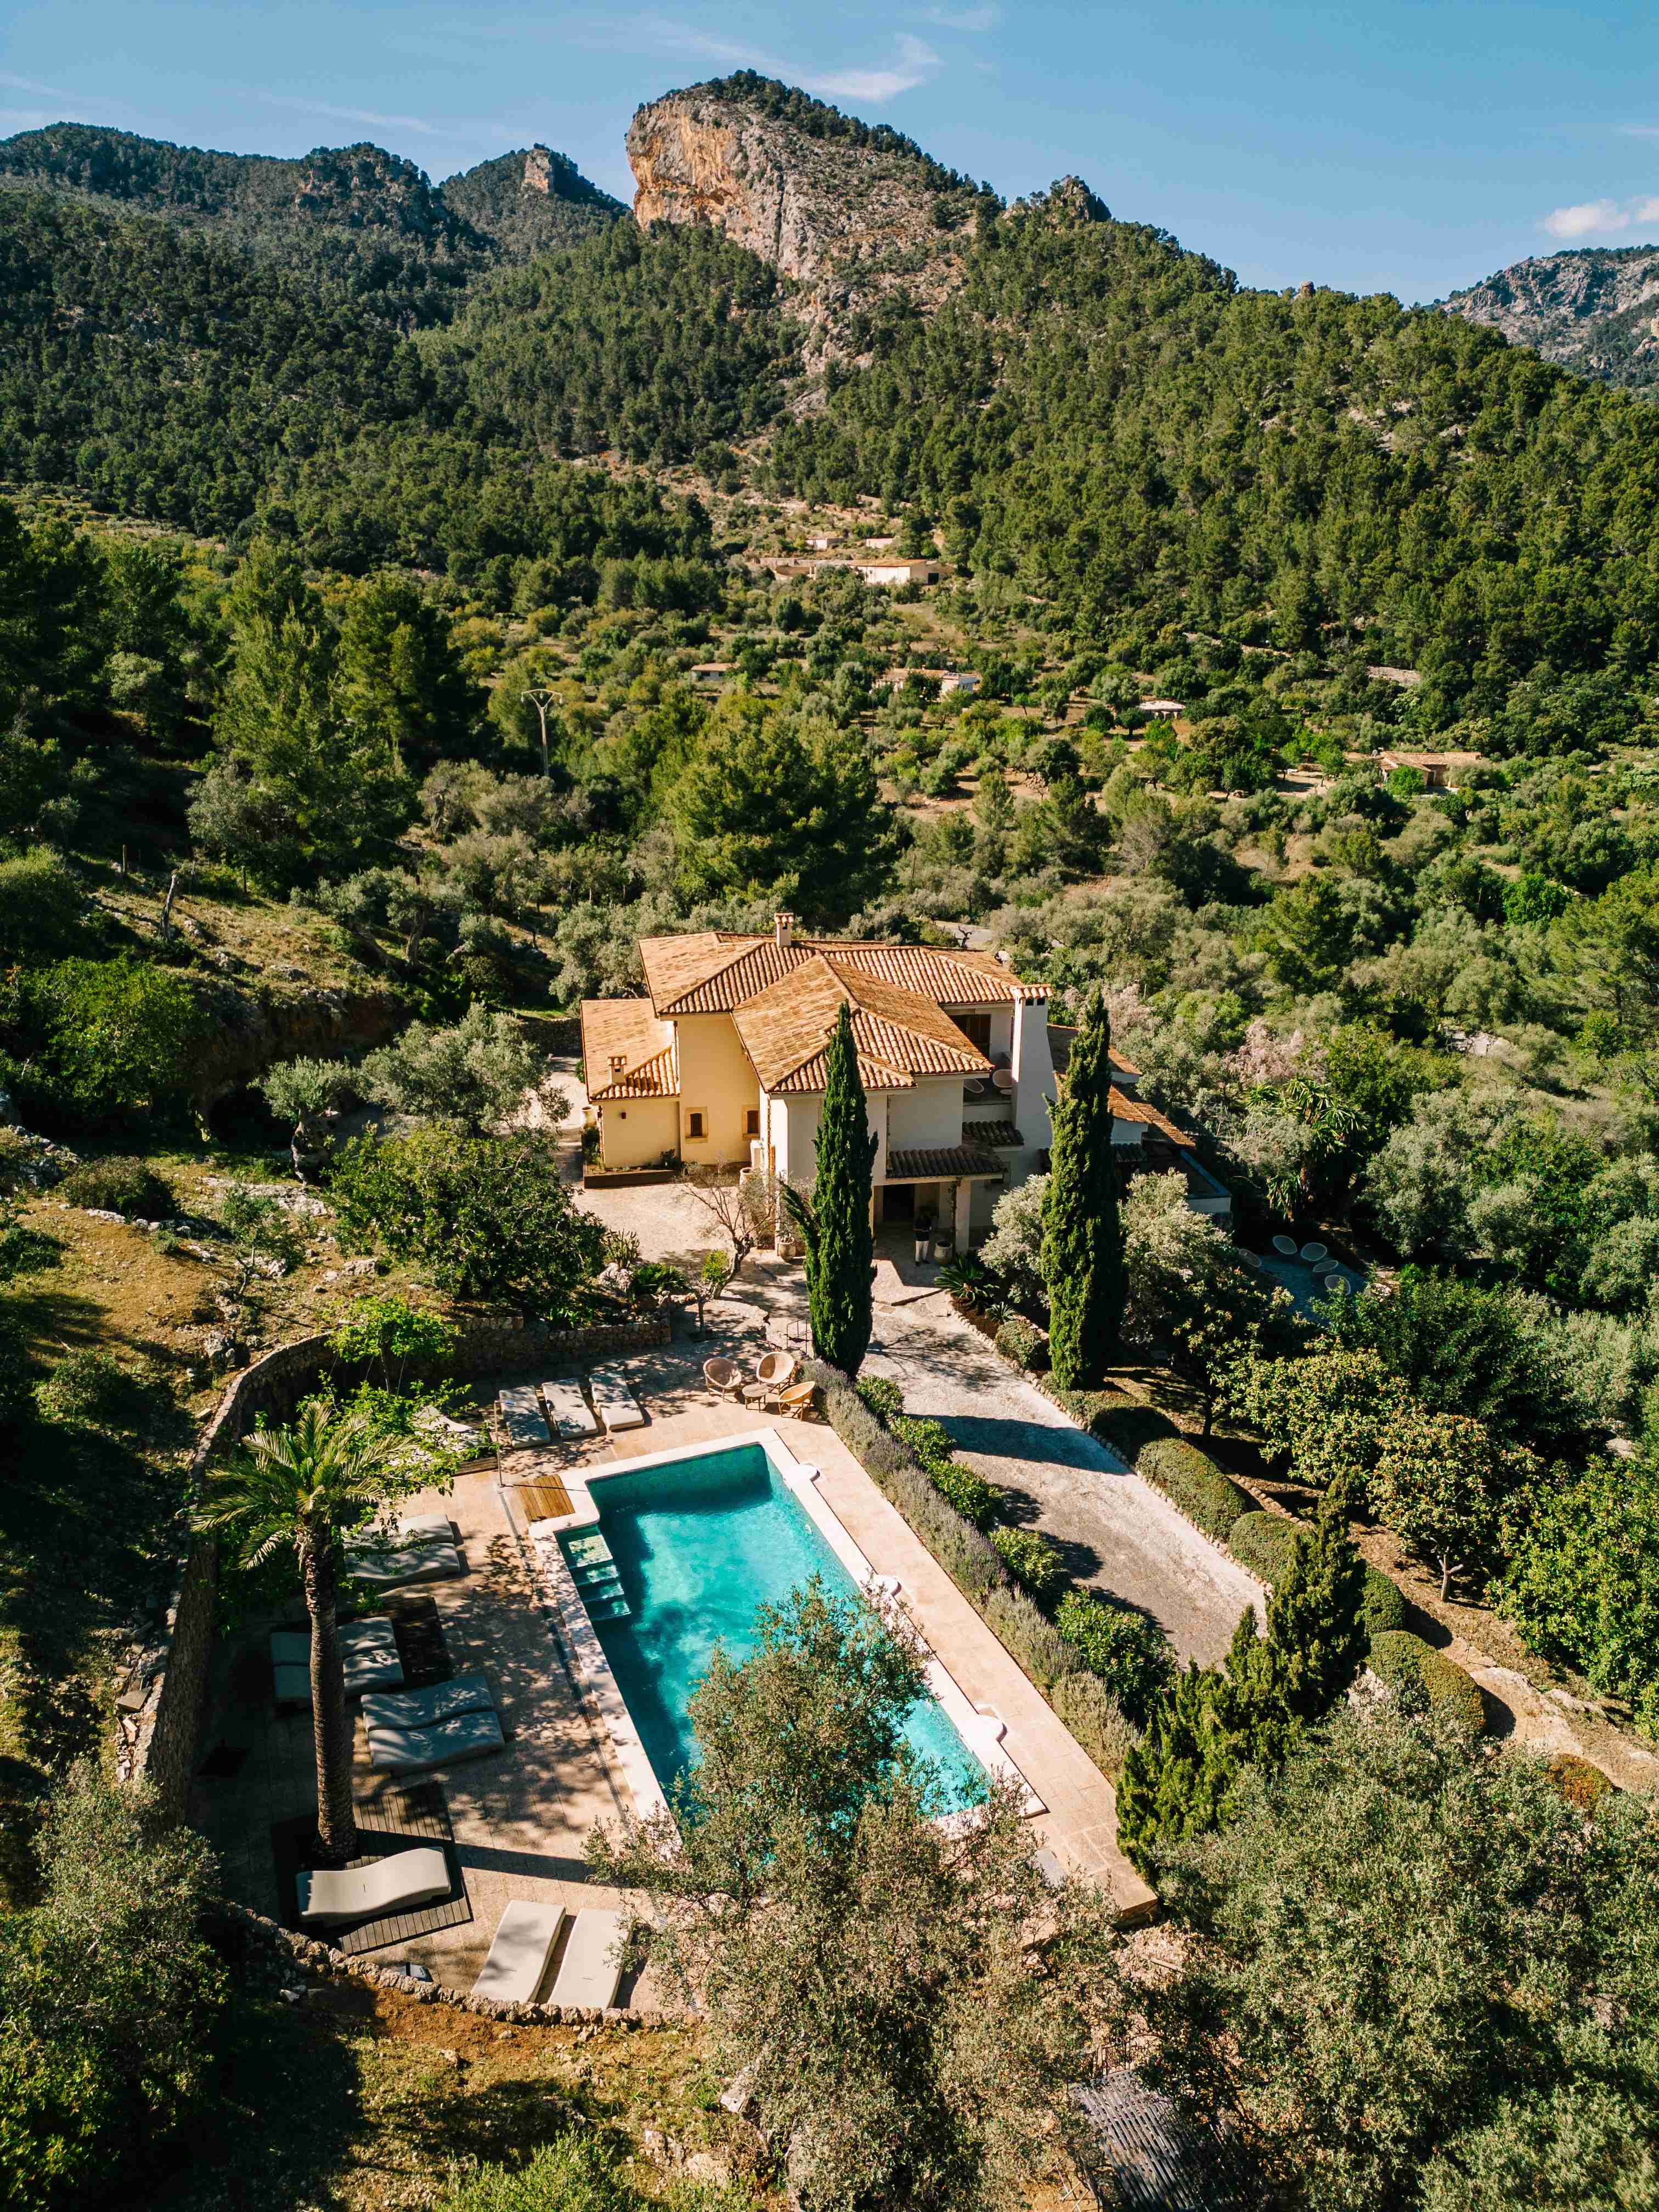 FATA MORGANA Island Homes Mallorca